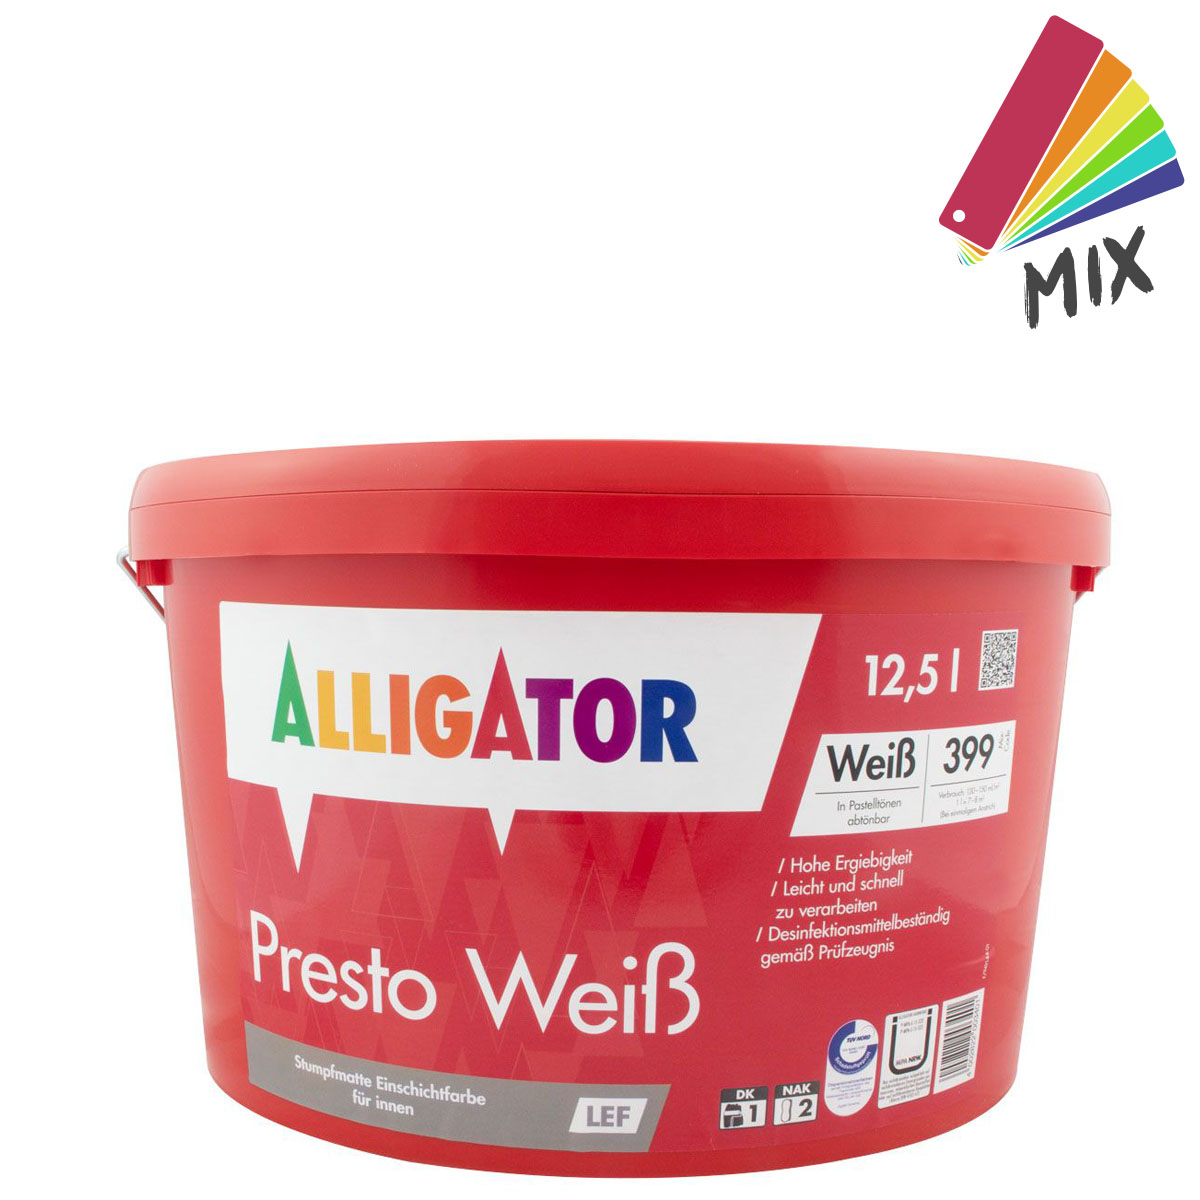 Alligator Presto Weiß LEF 12,5L MIX PG S ,Dispersions-Innenfarbe